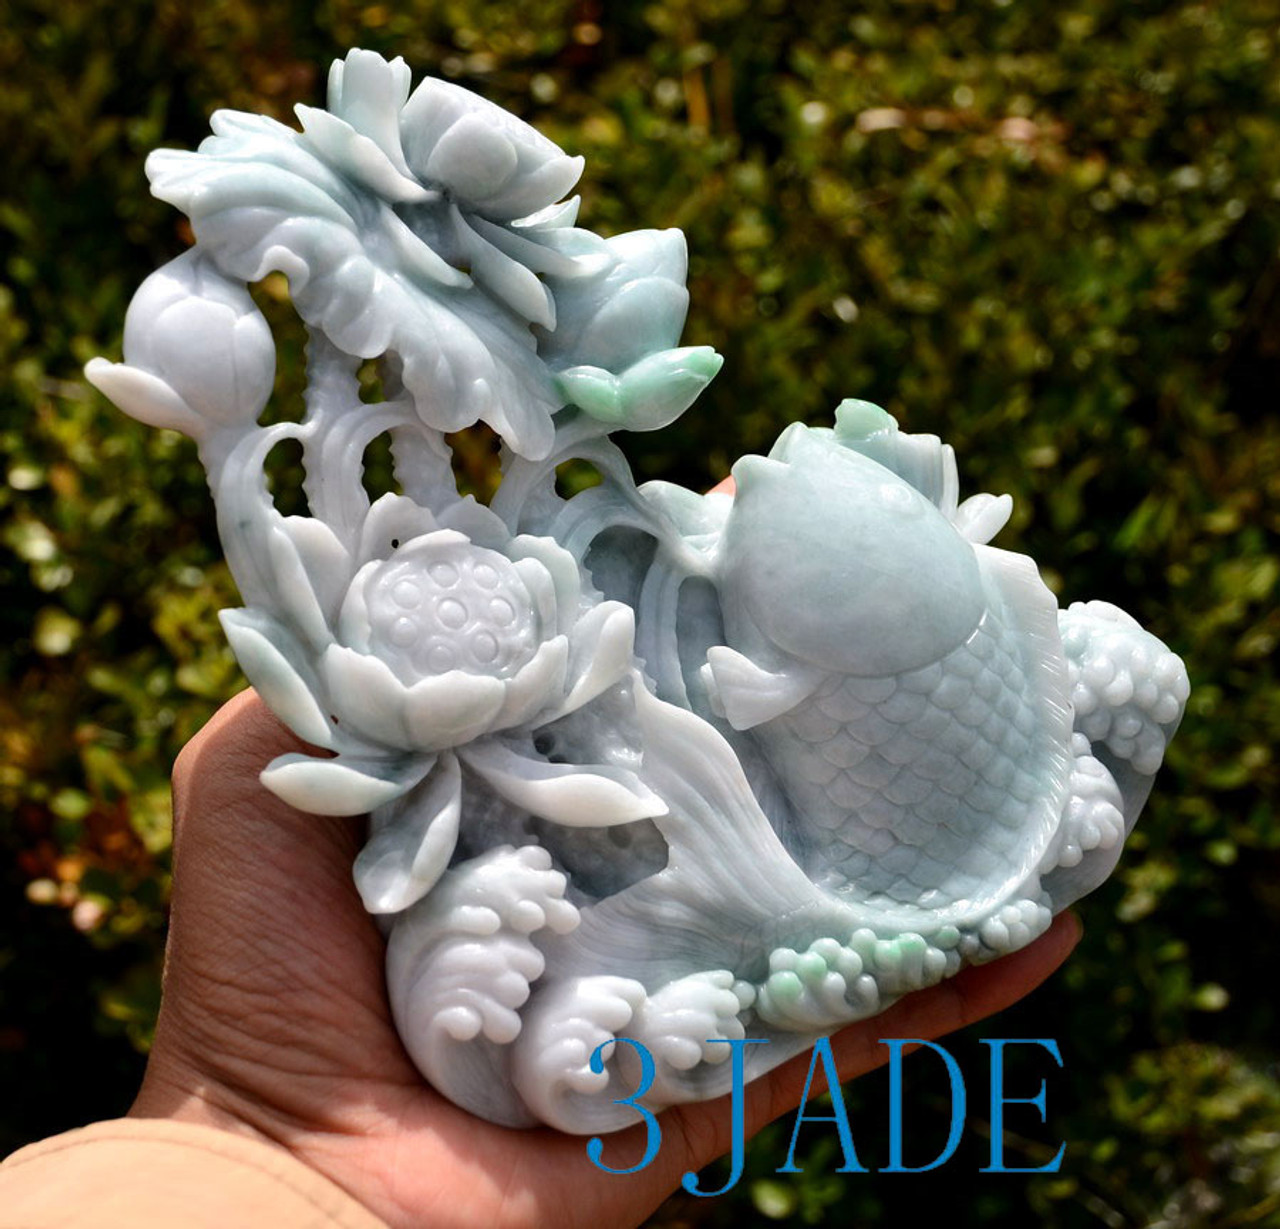 A Grade Green Jadeite Jade Lotus Flower & Koi Fish Statue Sculpture w/ certificate